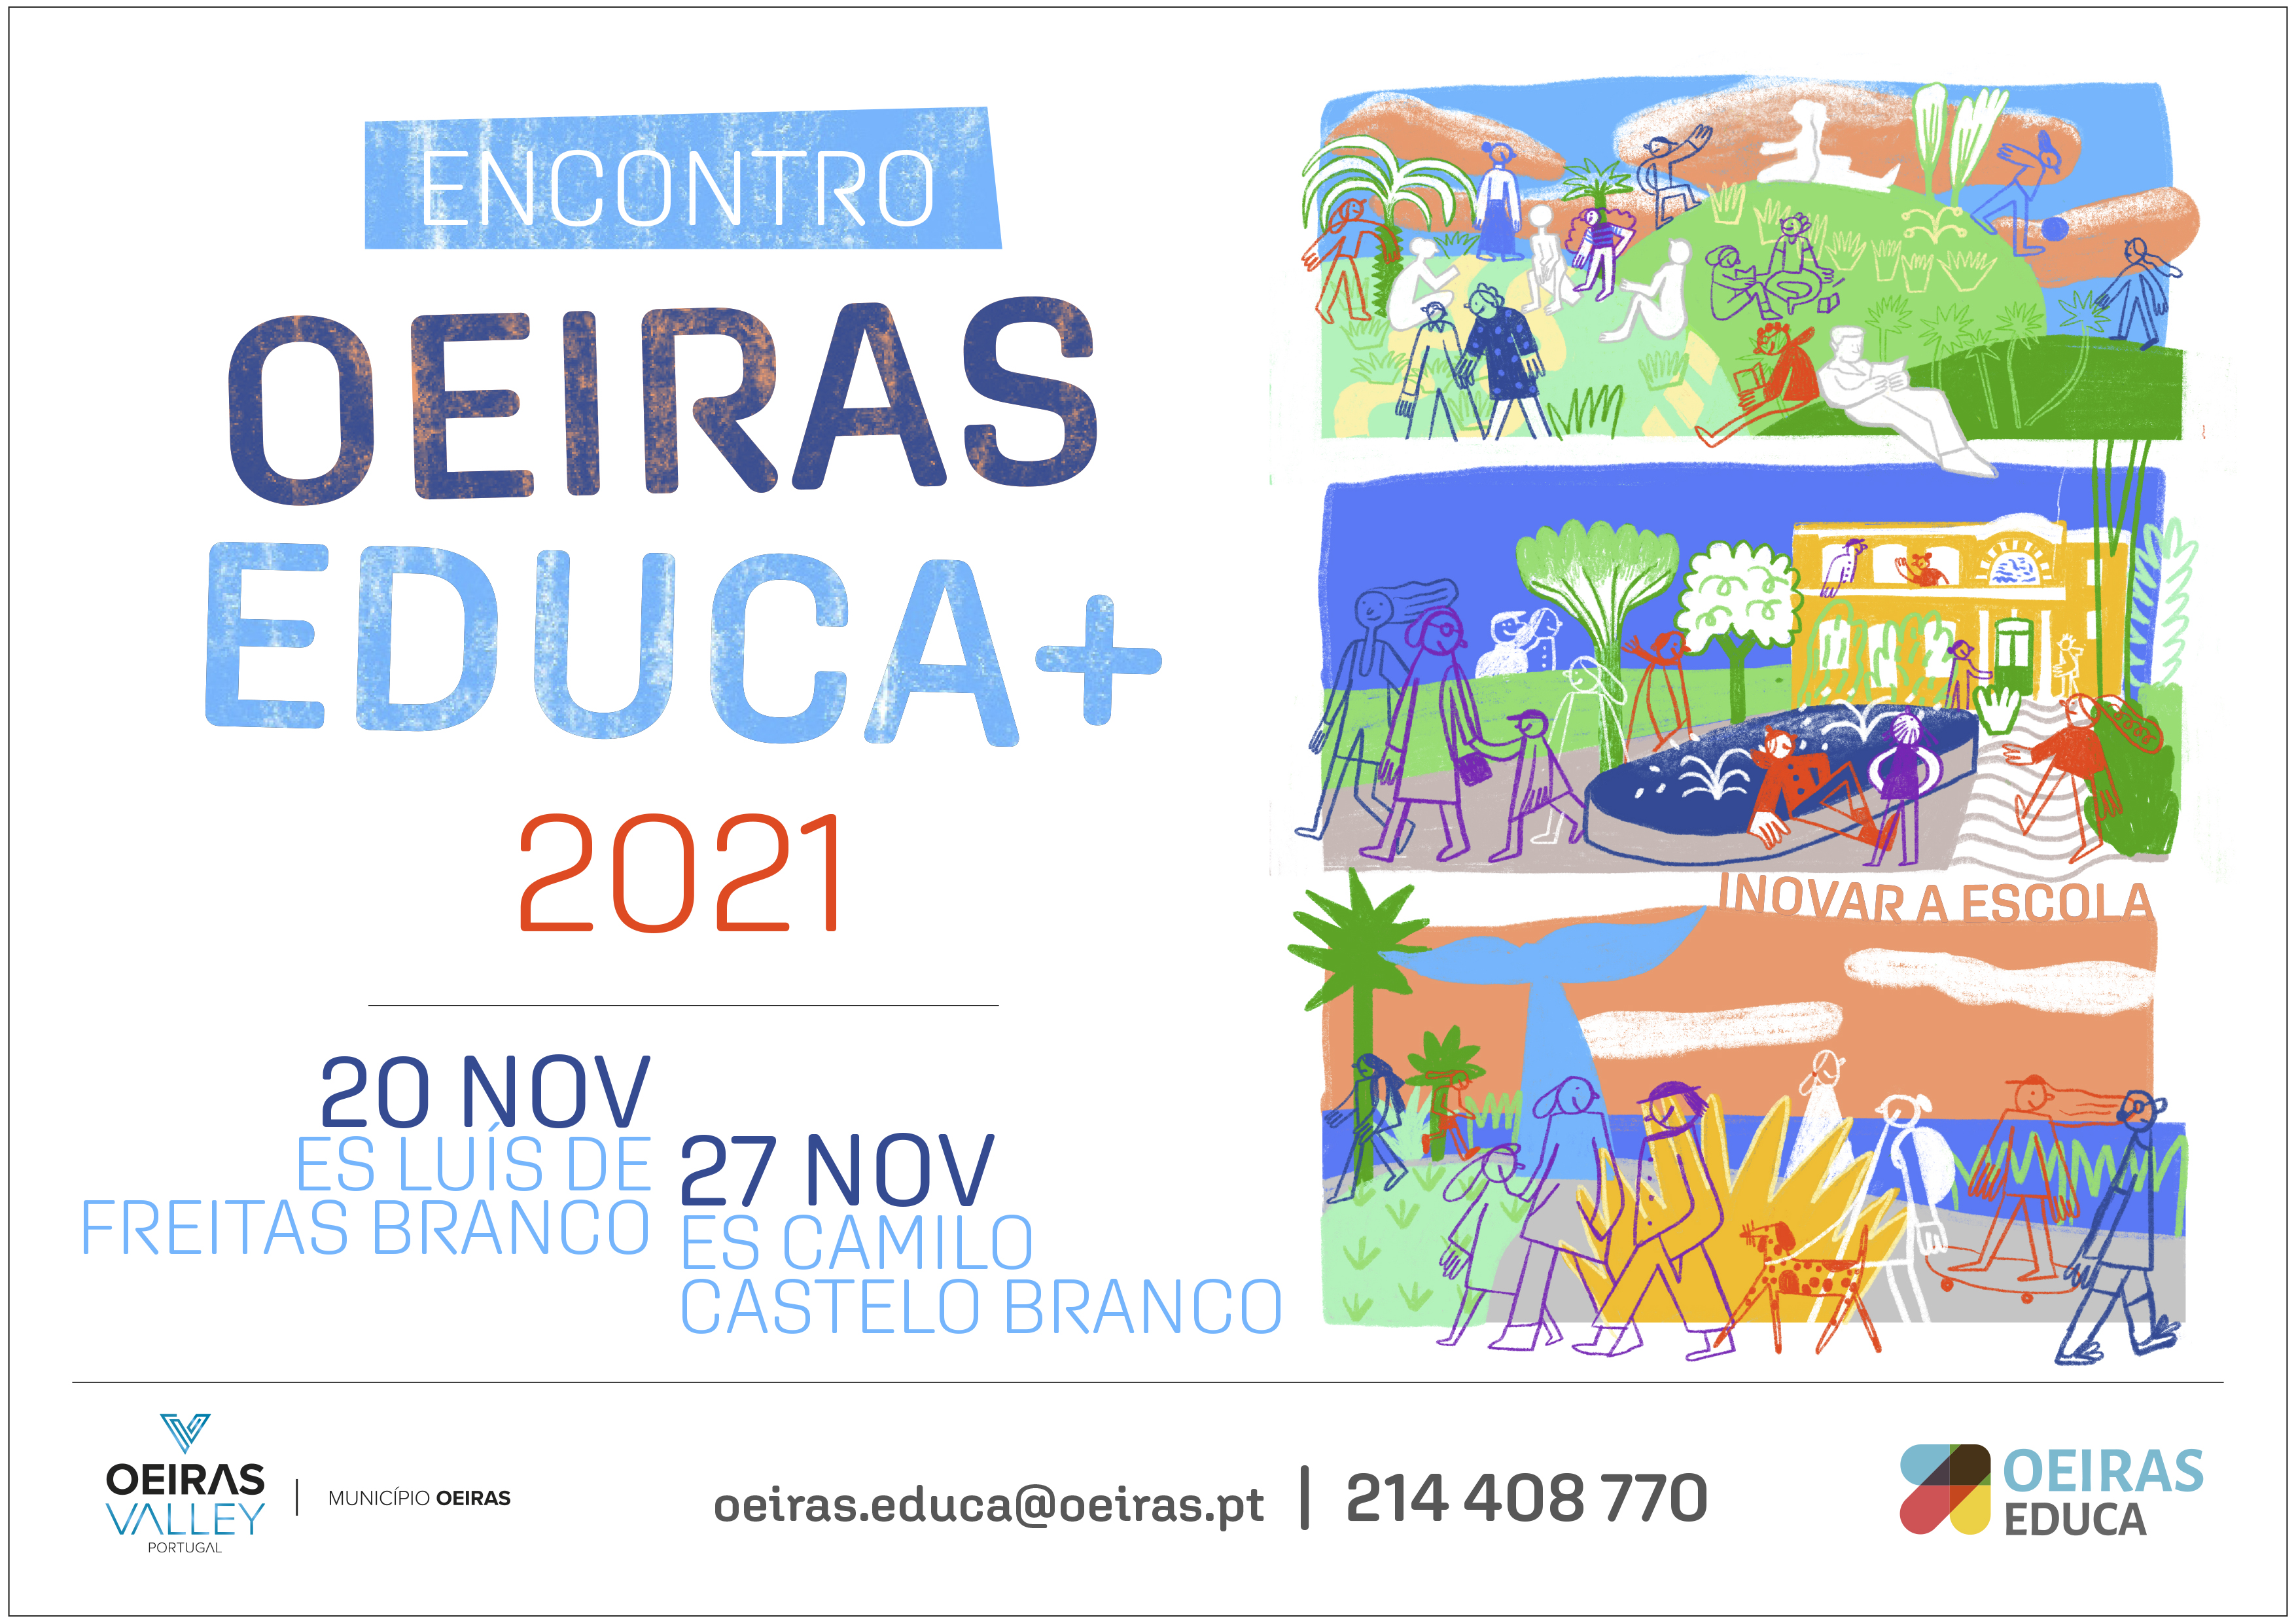 Primeiro dia do Encontro Oeiras EDUCA+ 2021 na ES Luís de Freitas Branco